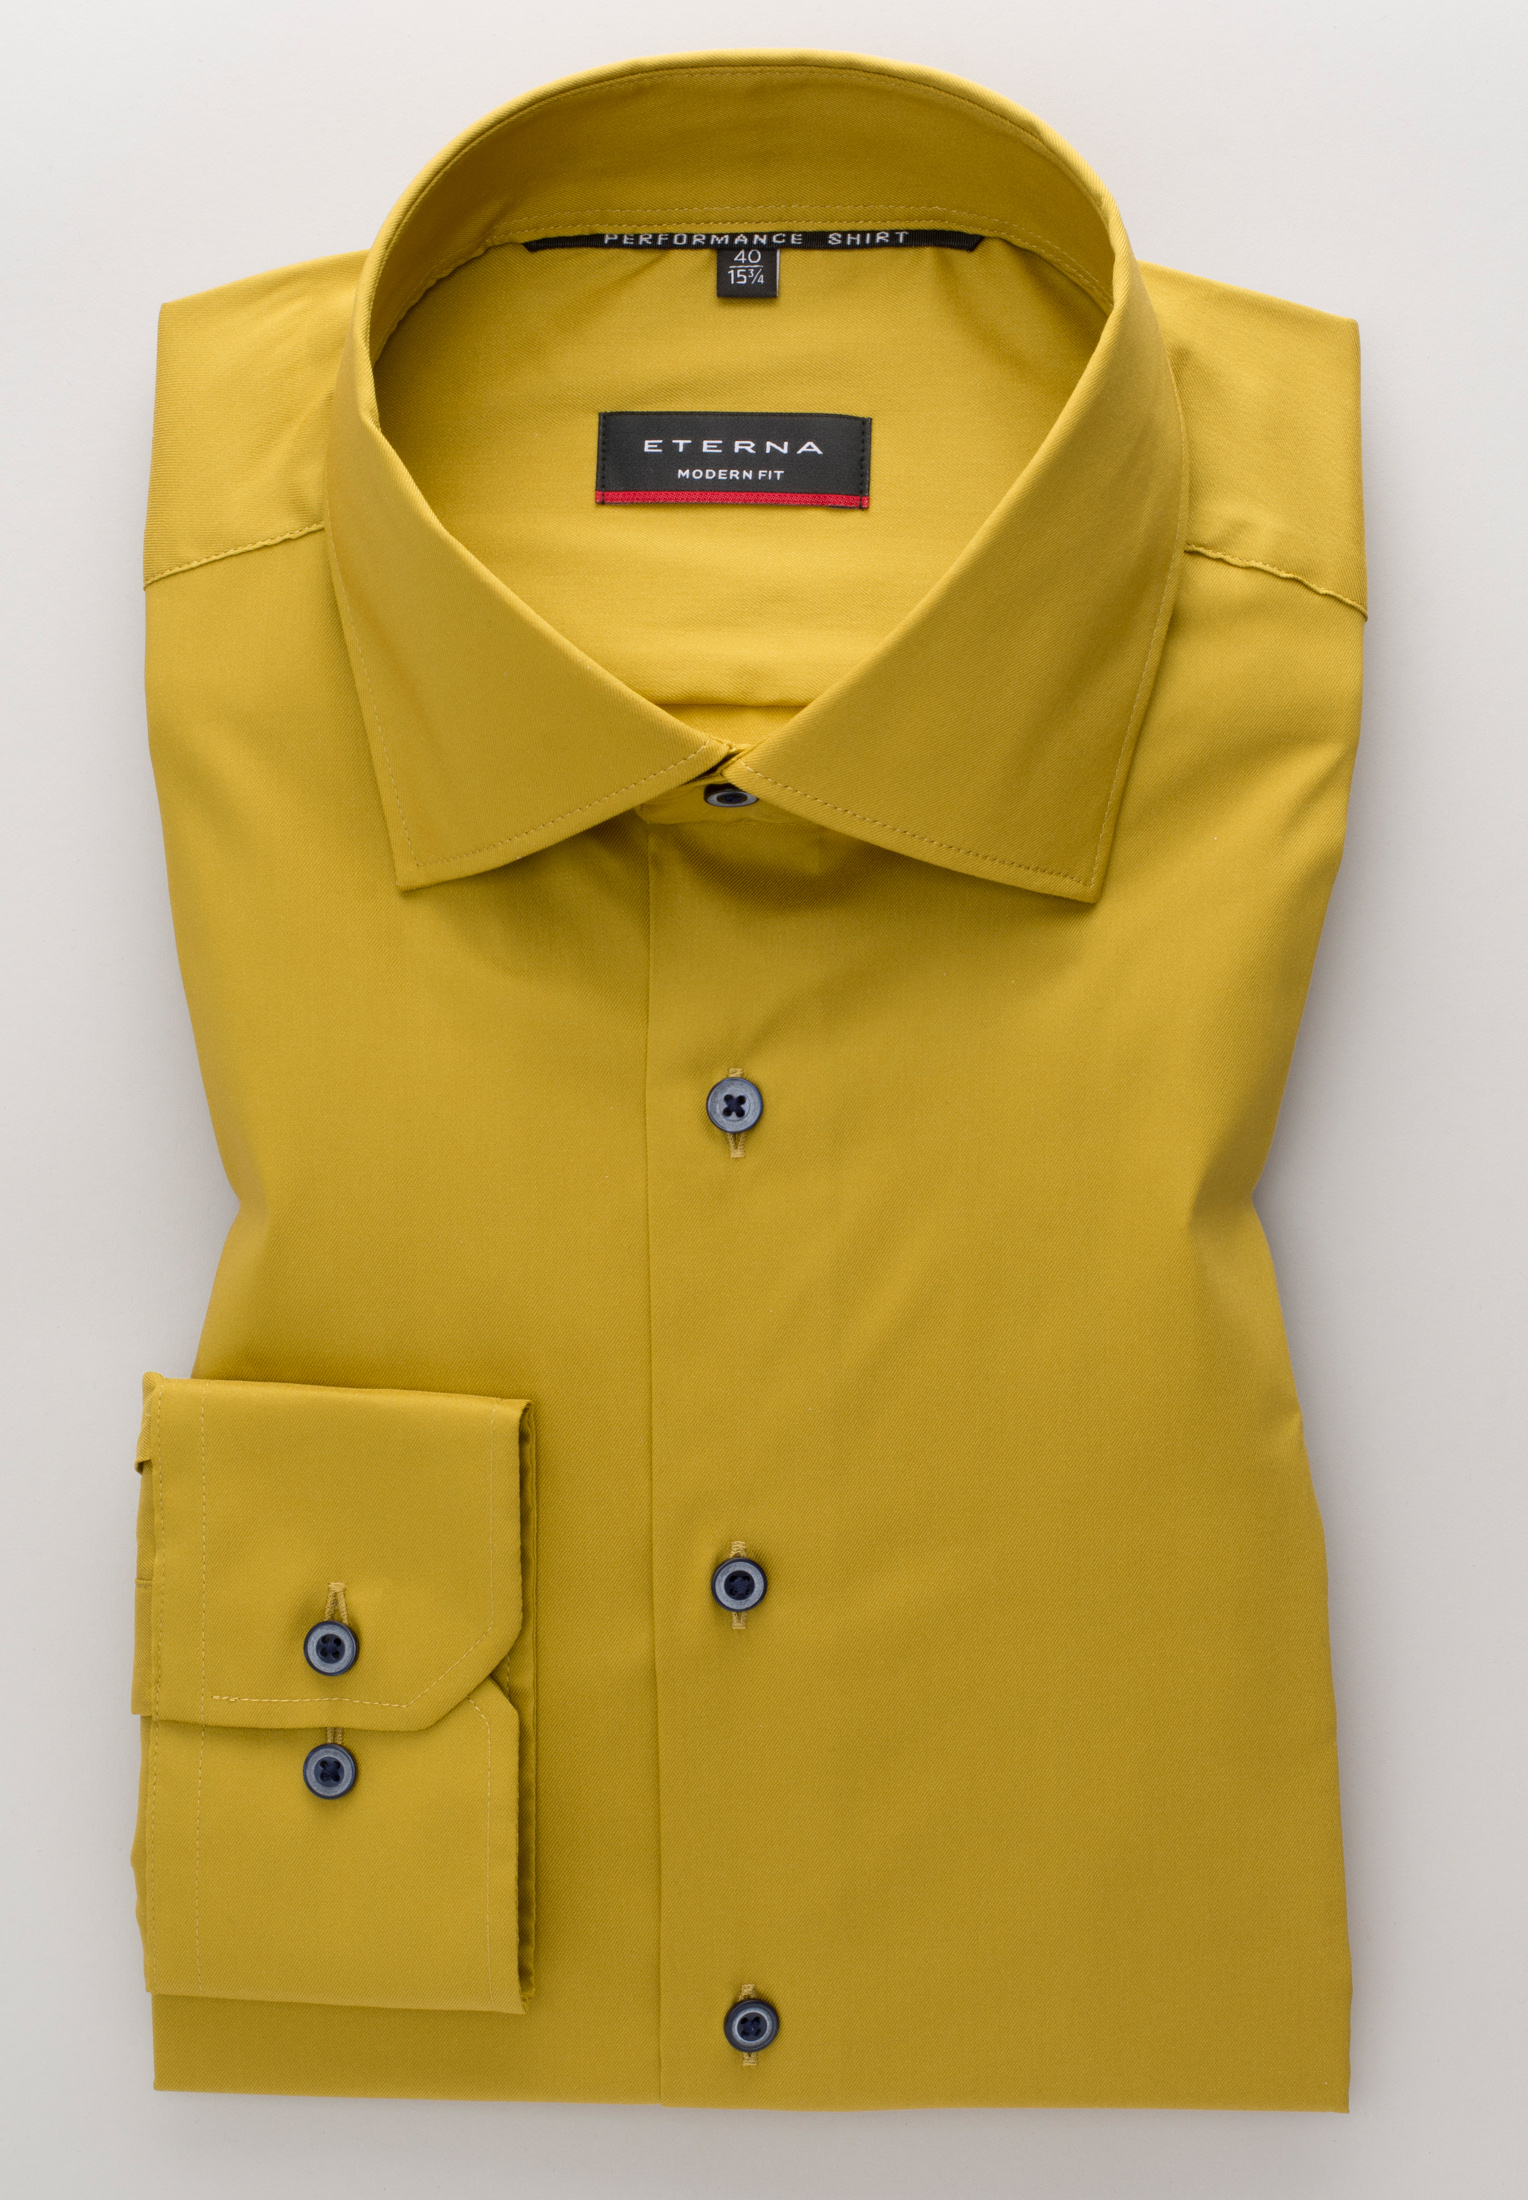 MODERN FIT | | gelb in Shirt gelb unifarben 1SH02224-07-01-40-1/1 Performance | Langarm | 40